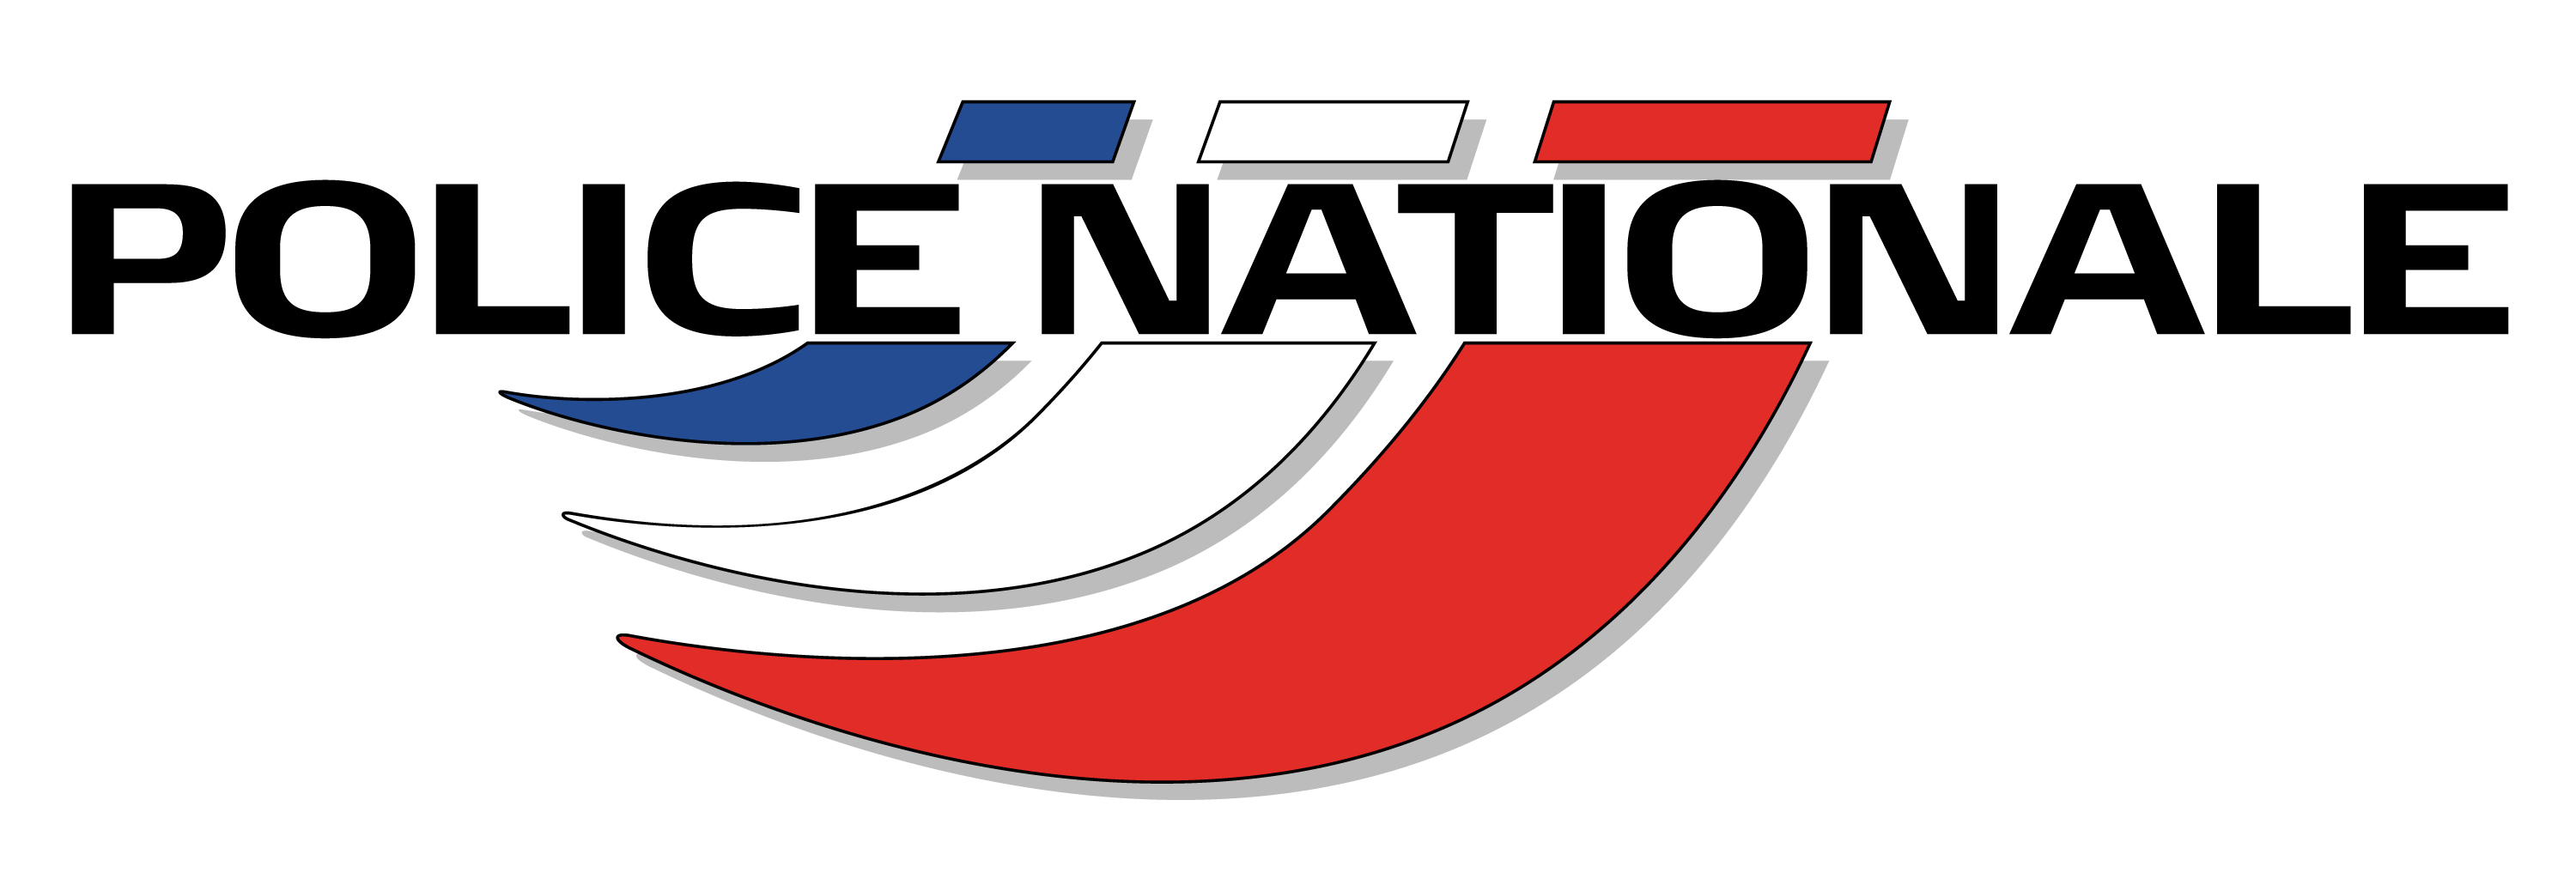 National Police Logo